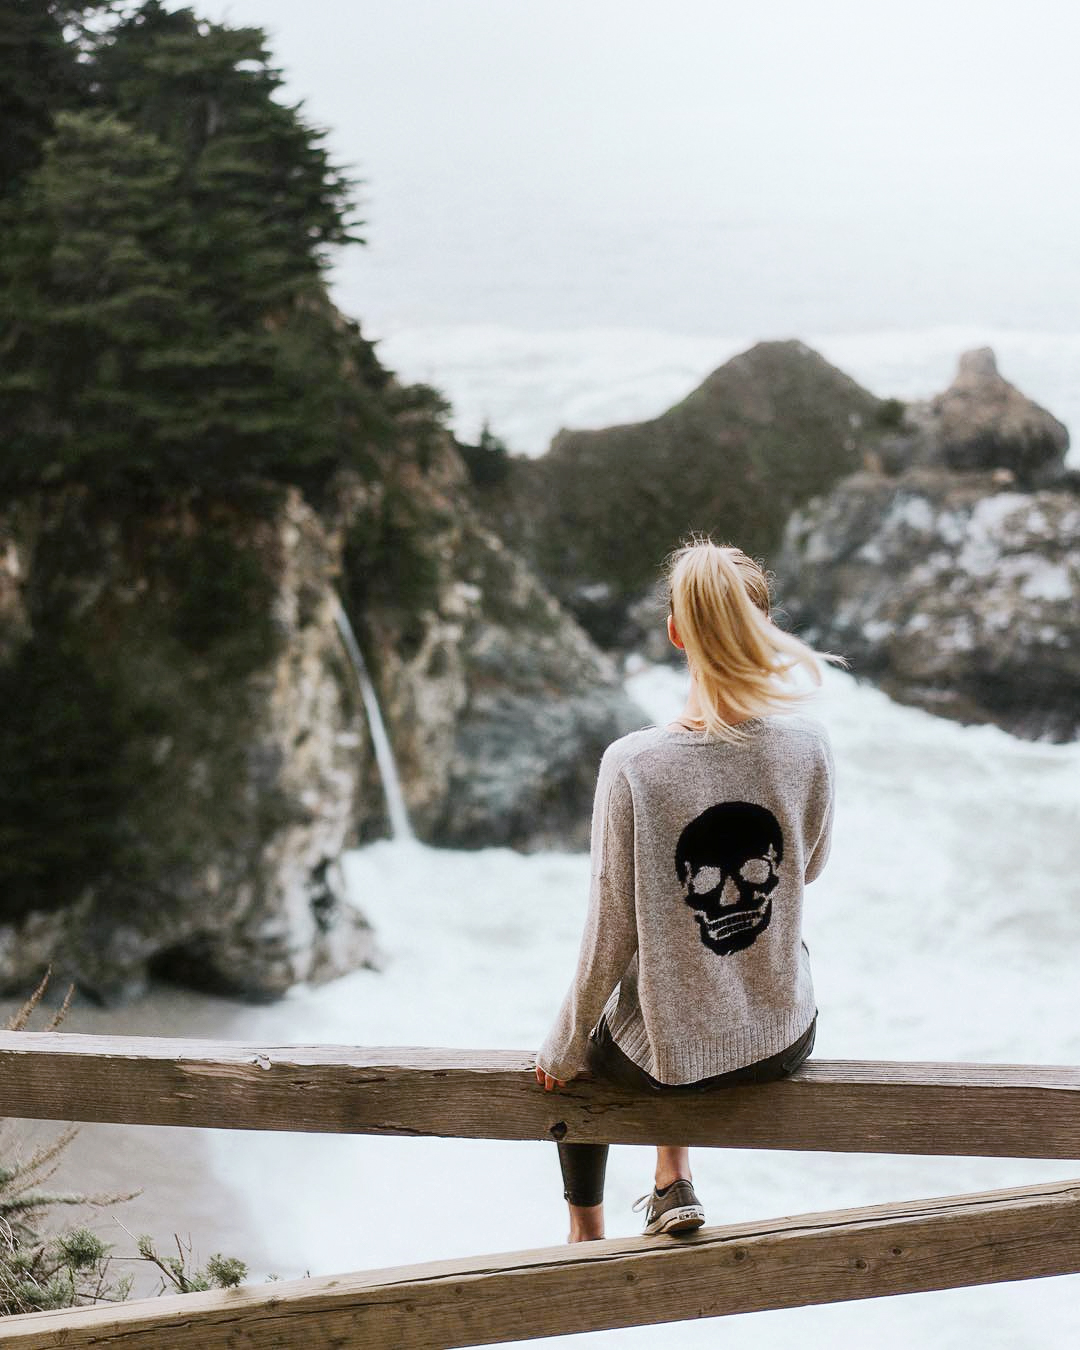 Girl at McWay Falls Overlook in Big Sur California